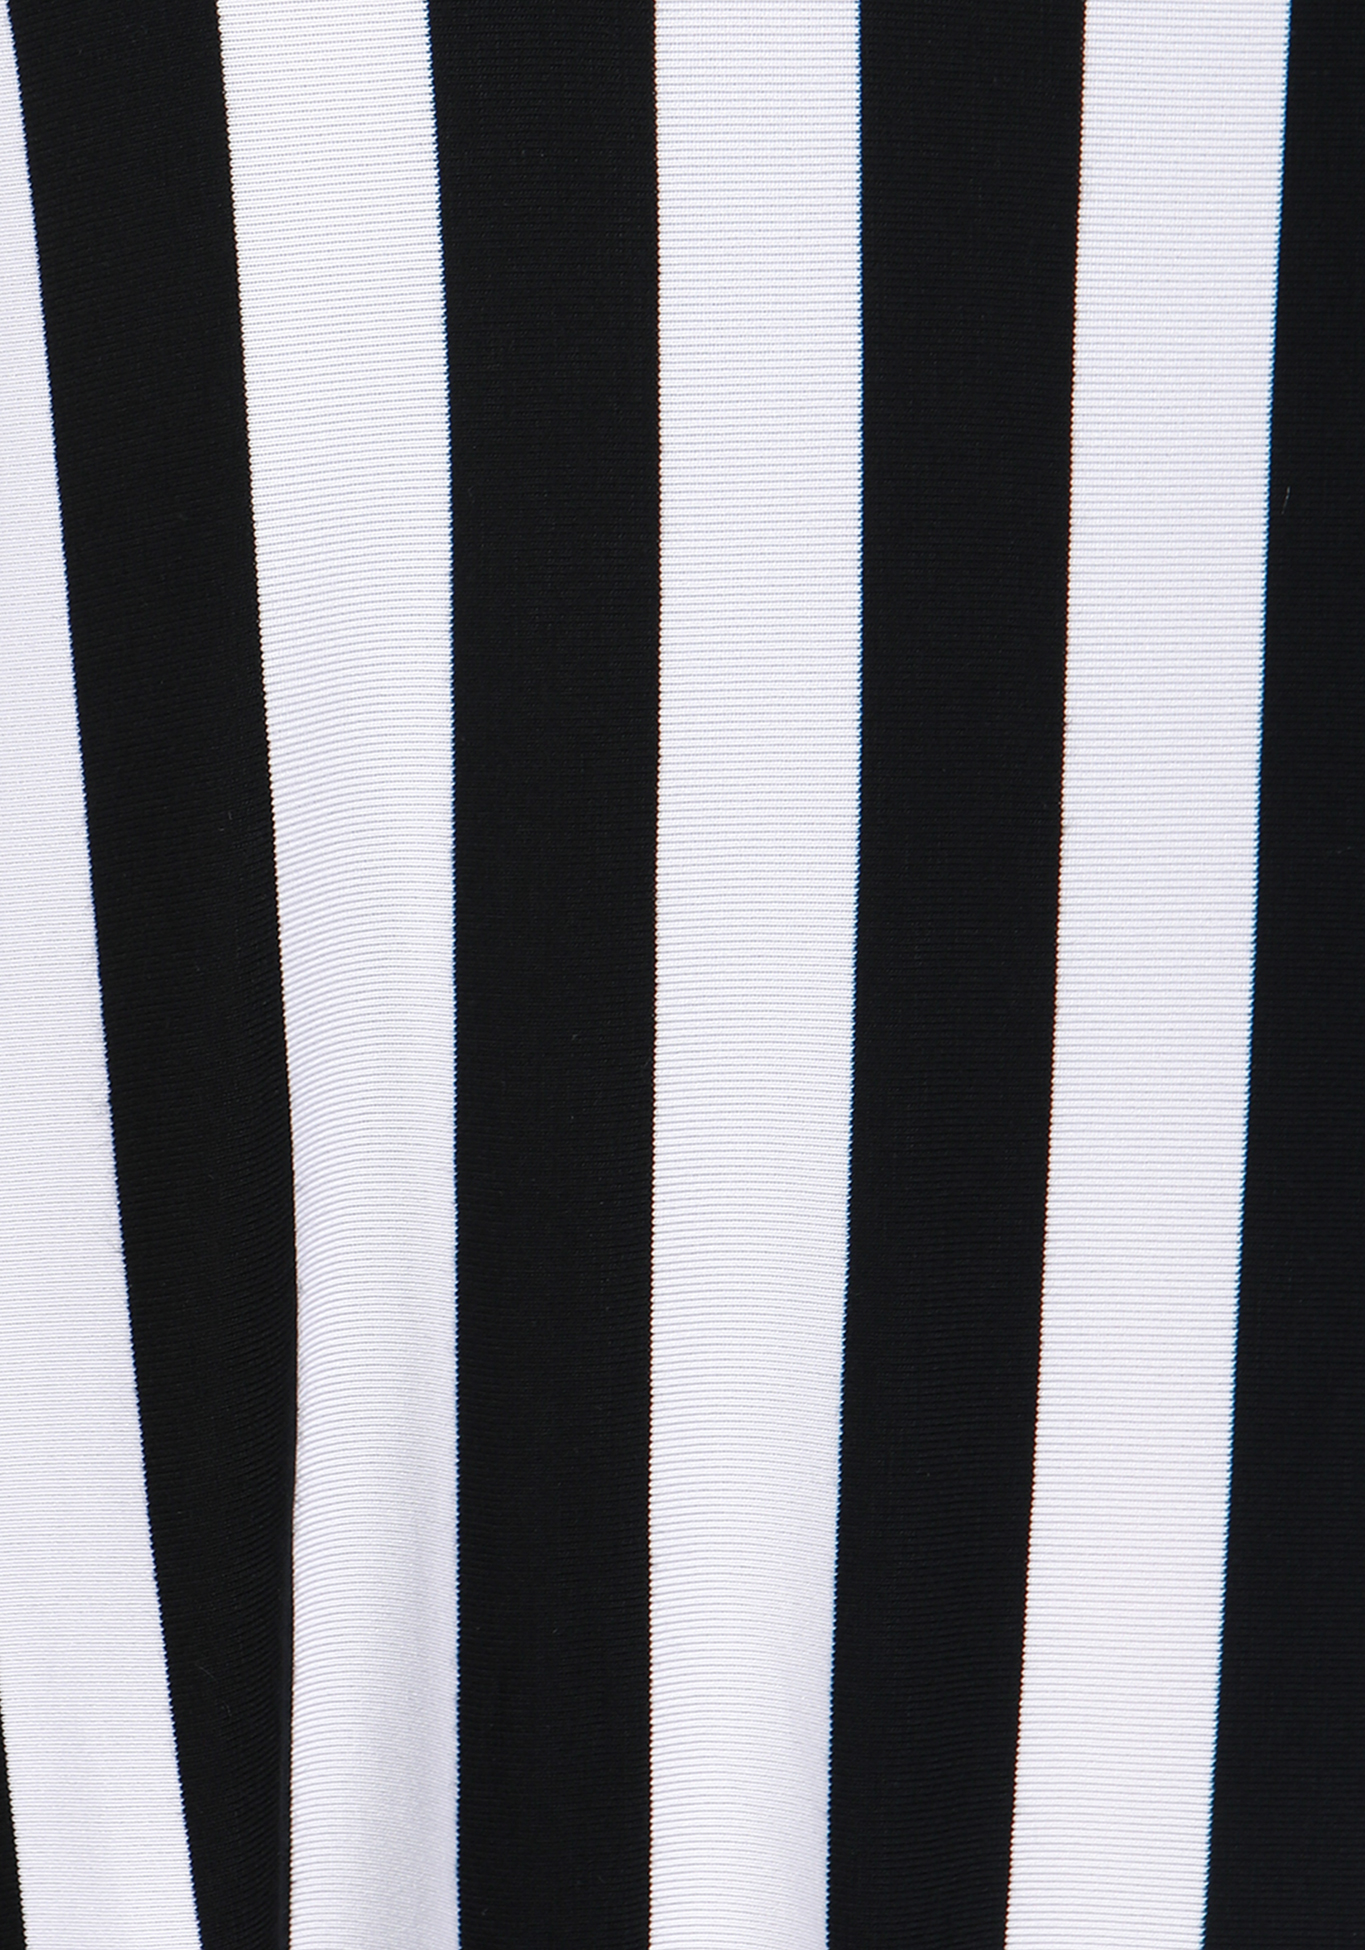 Платье "Чарующий силуэт" ZORY, размер 54, цвет черно-белый - фото 4